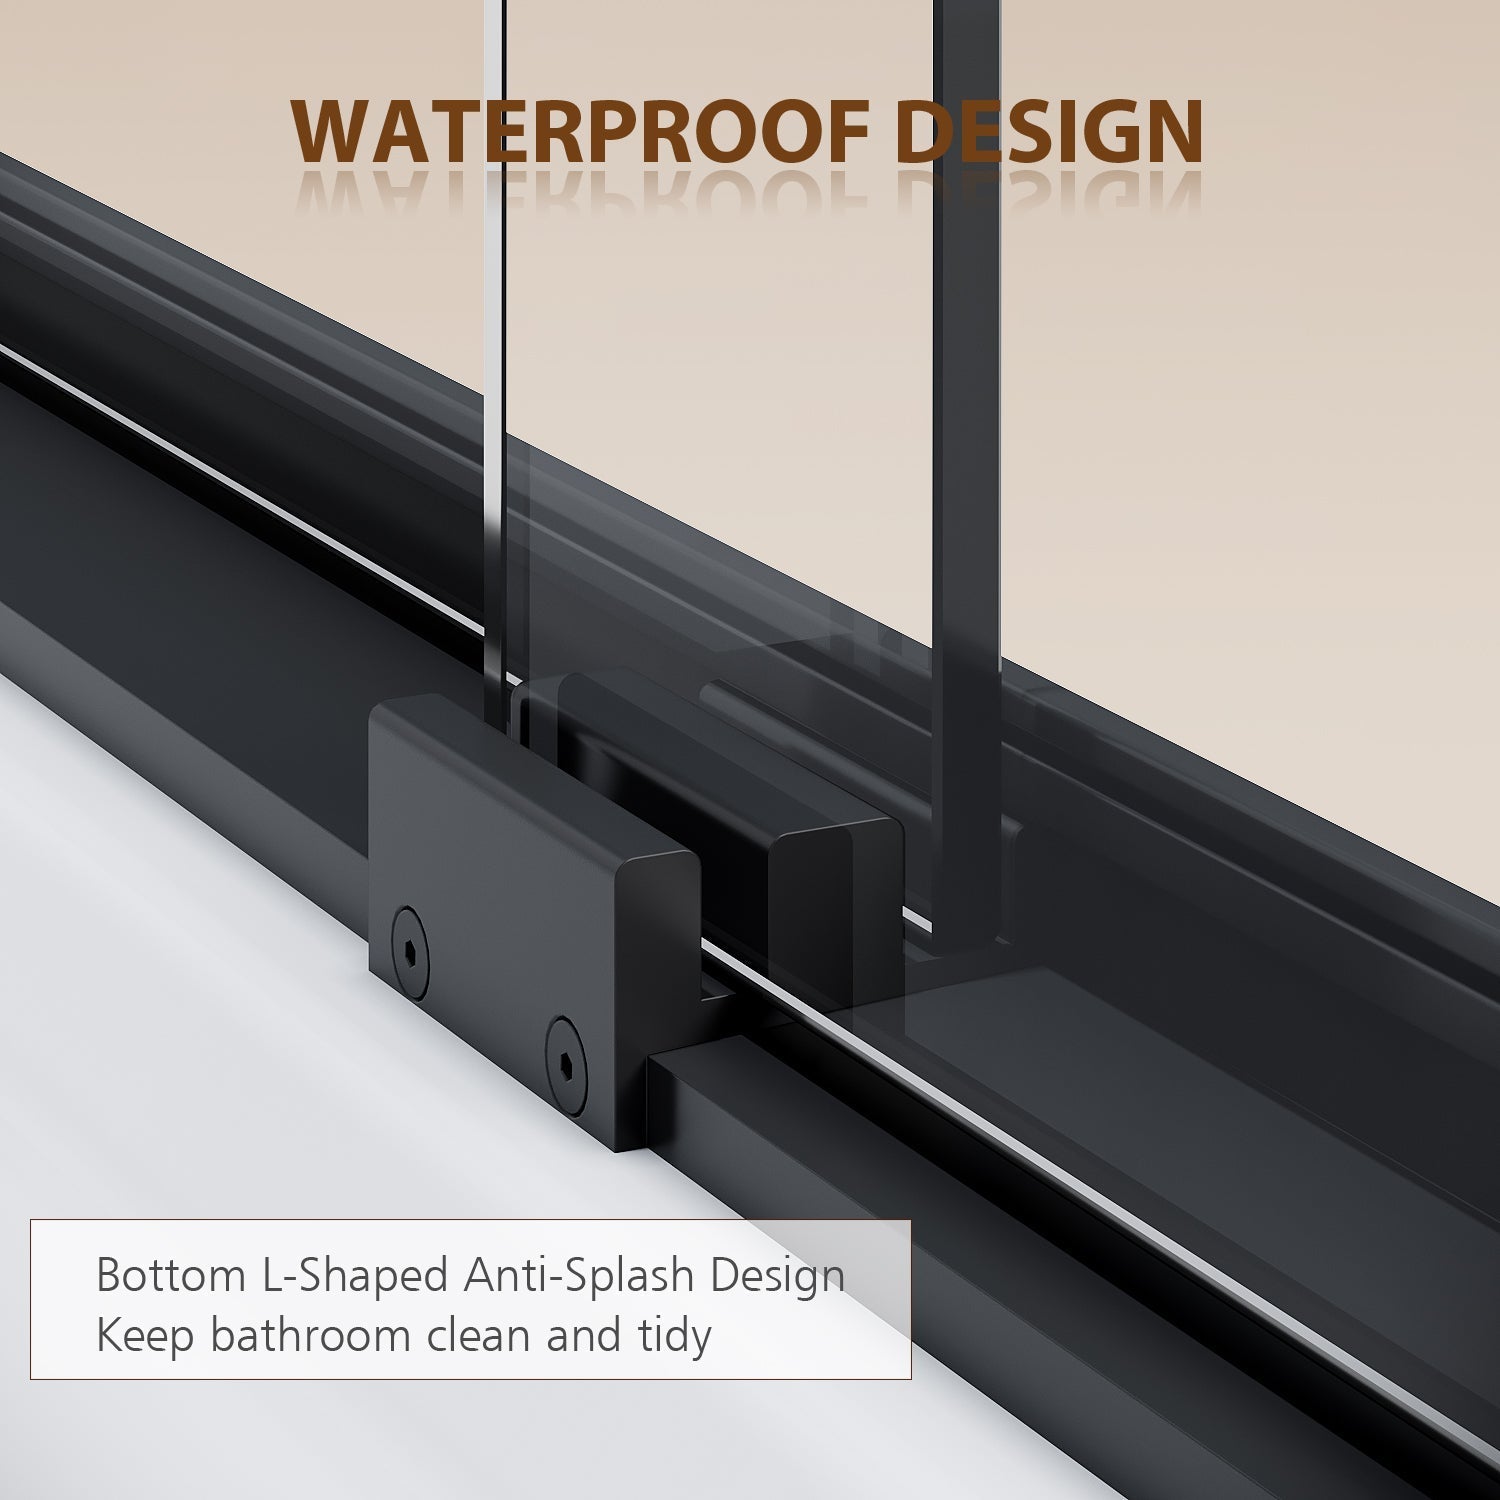 waterproof design, bottom l-shaped anti-splash design keep bathroom clean and tidy